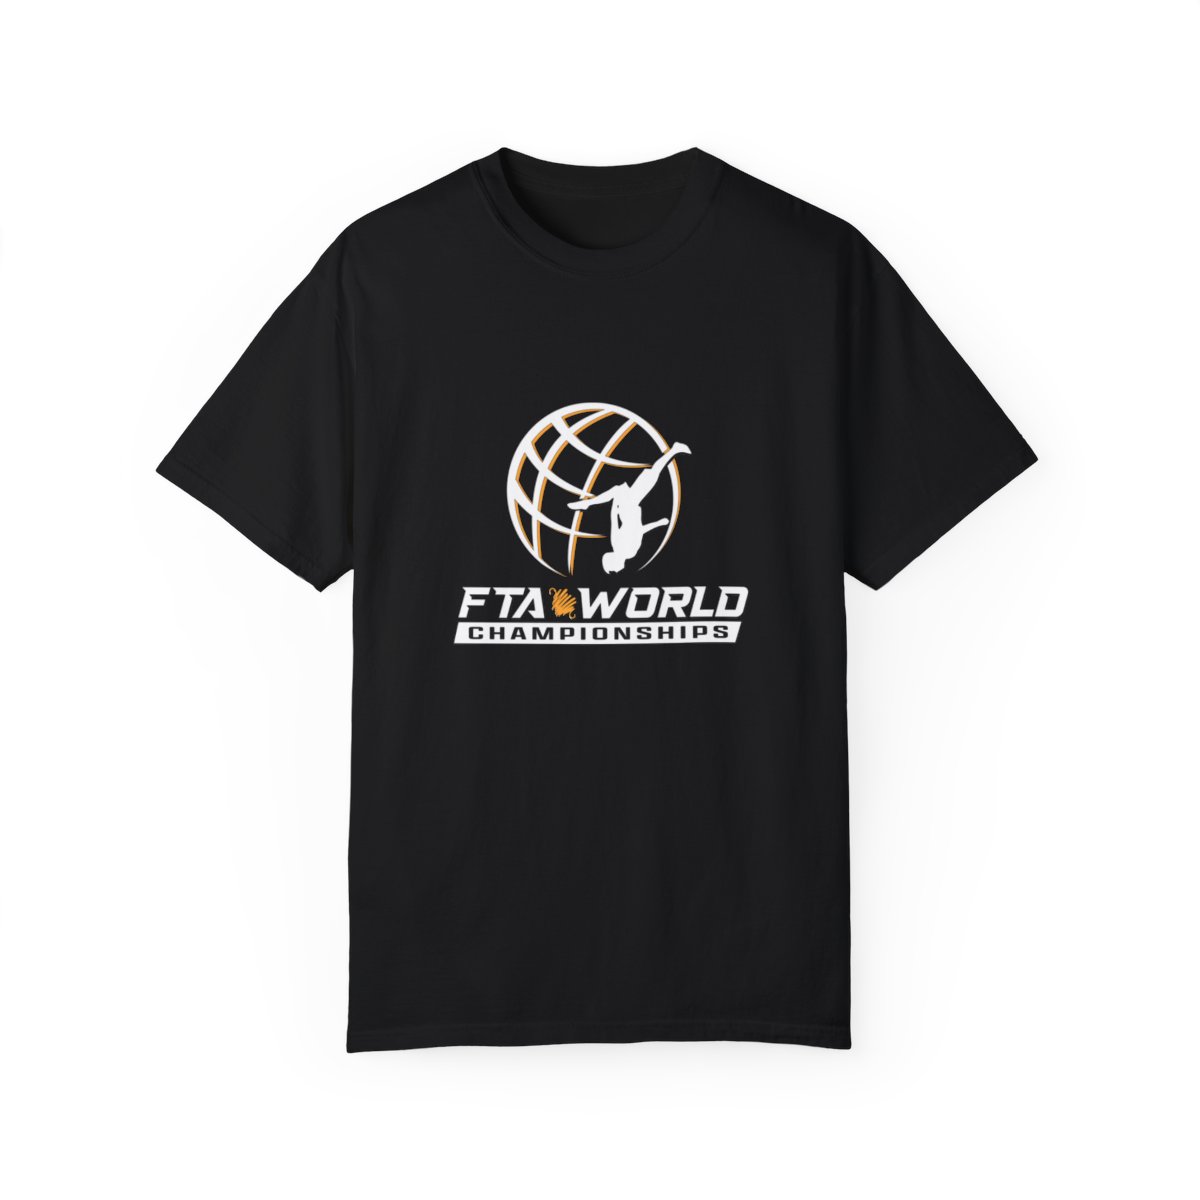 World Champs EUROTRAMP™ T-shirt product thumbnail image